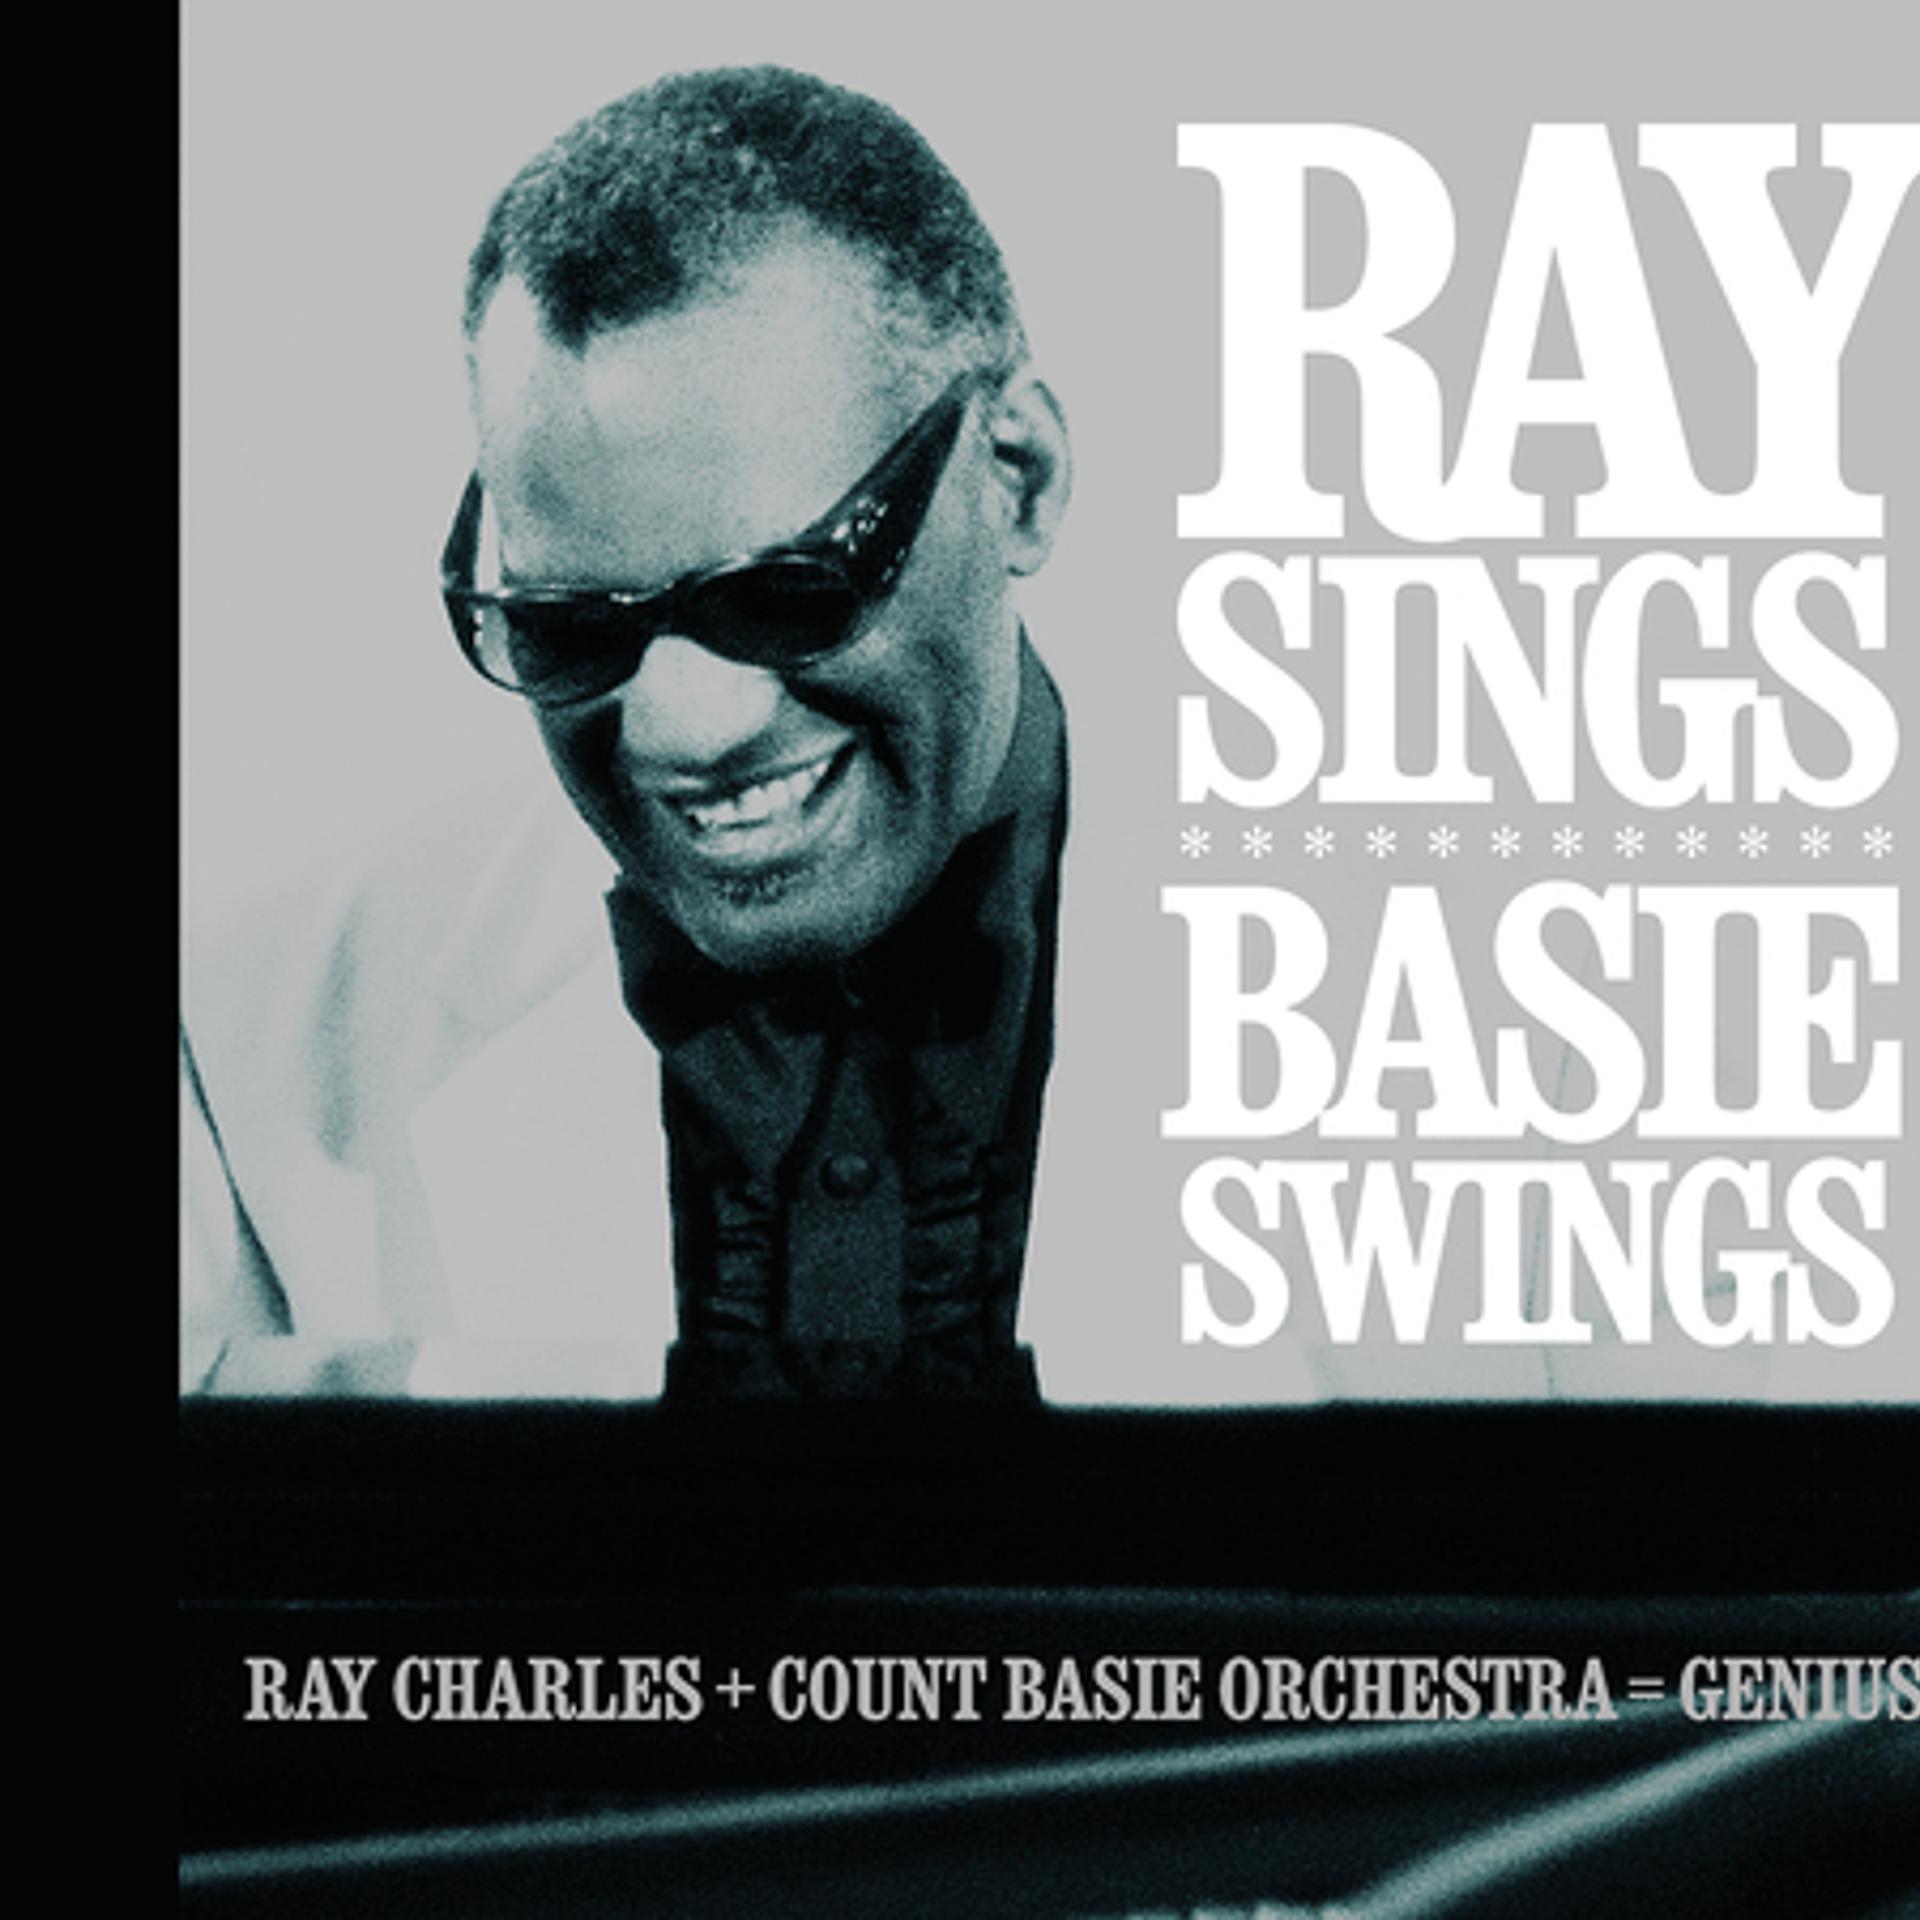 Постер альбома Ray Sings, Basie Swings